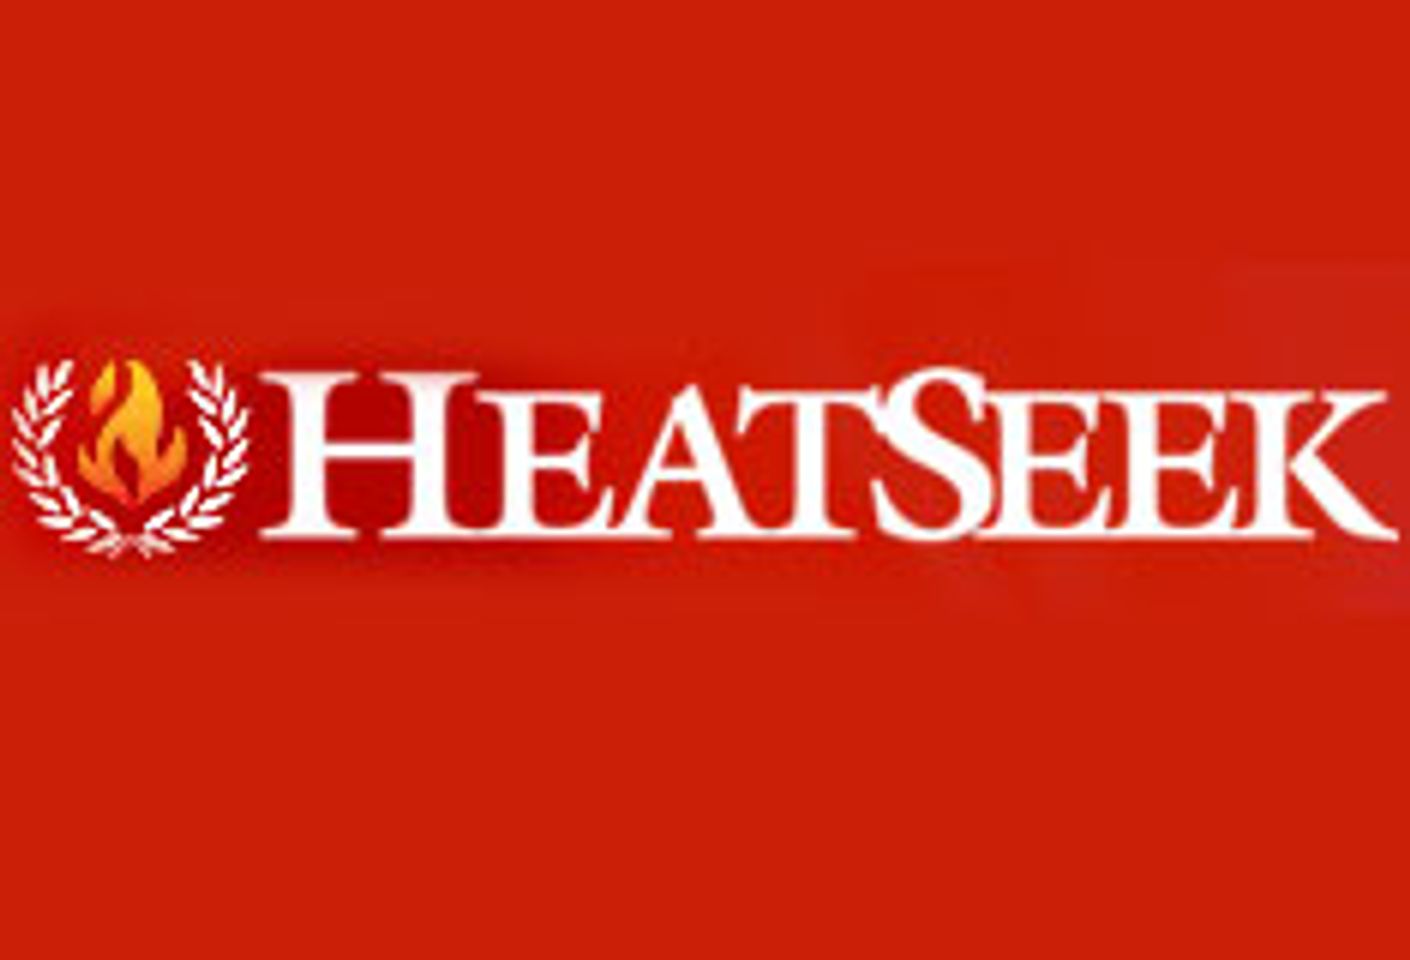 HeatSeek Goes International